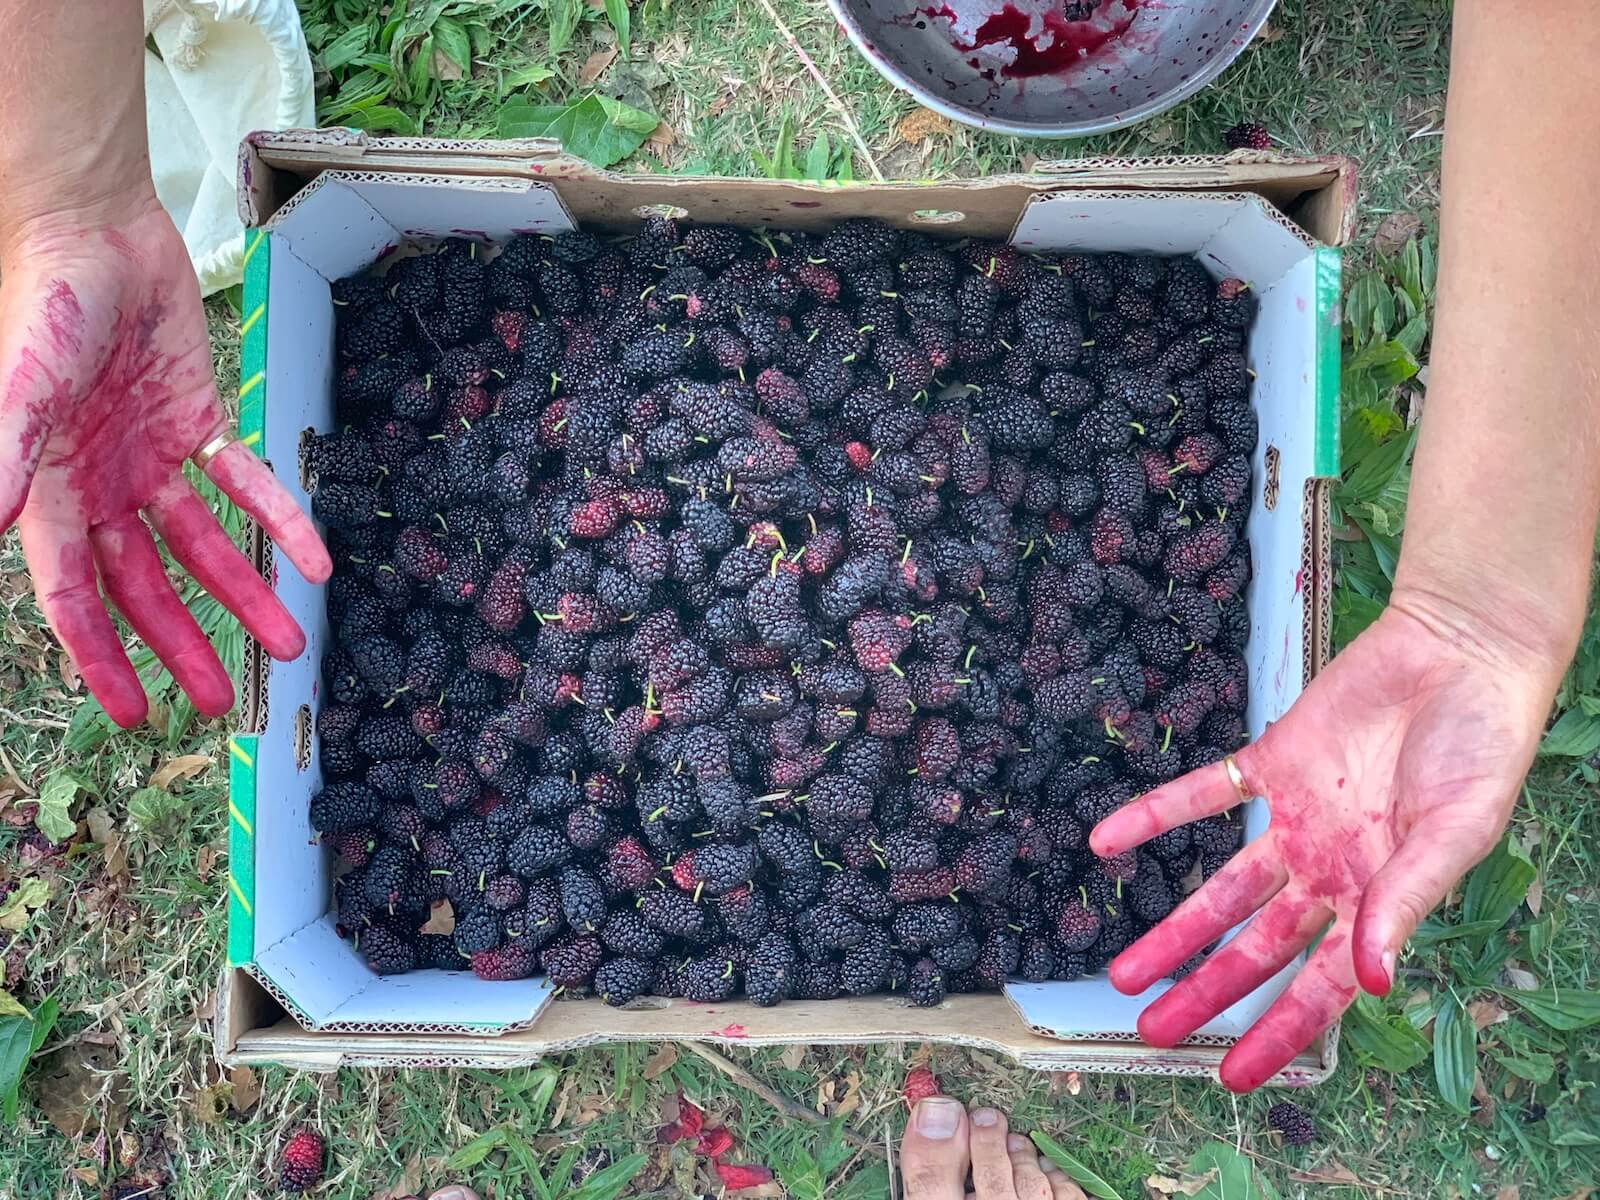 Harvesting mulberry